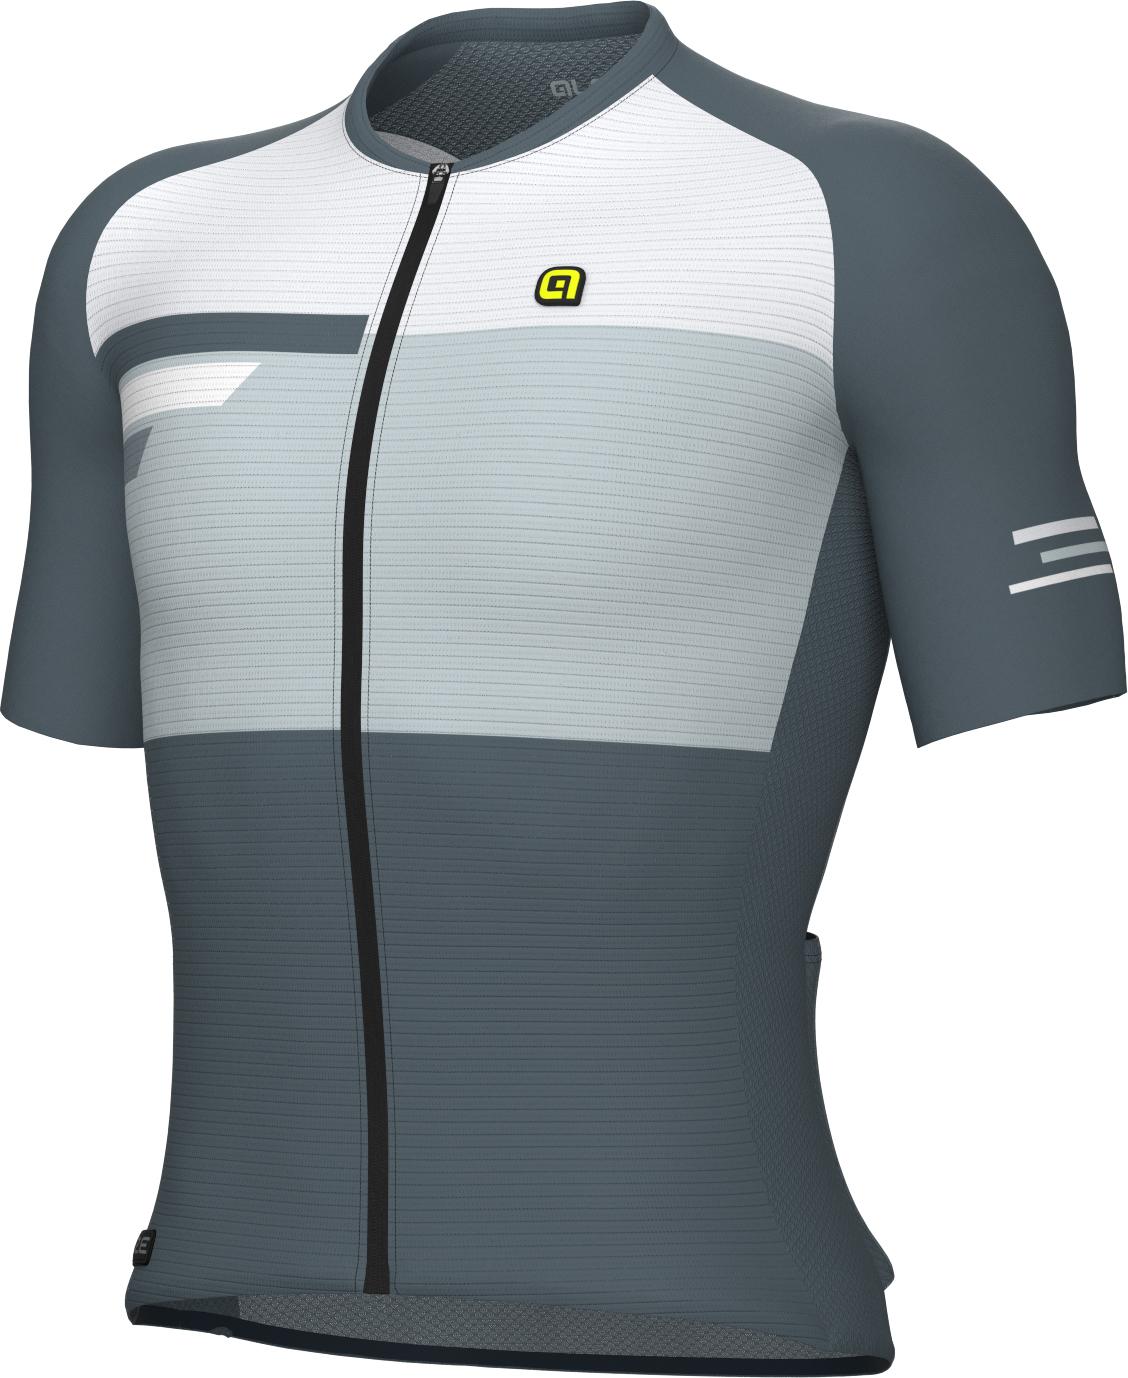 Al Prs Radar Cycling Jersey - Grey